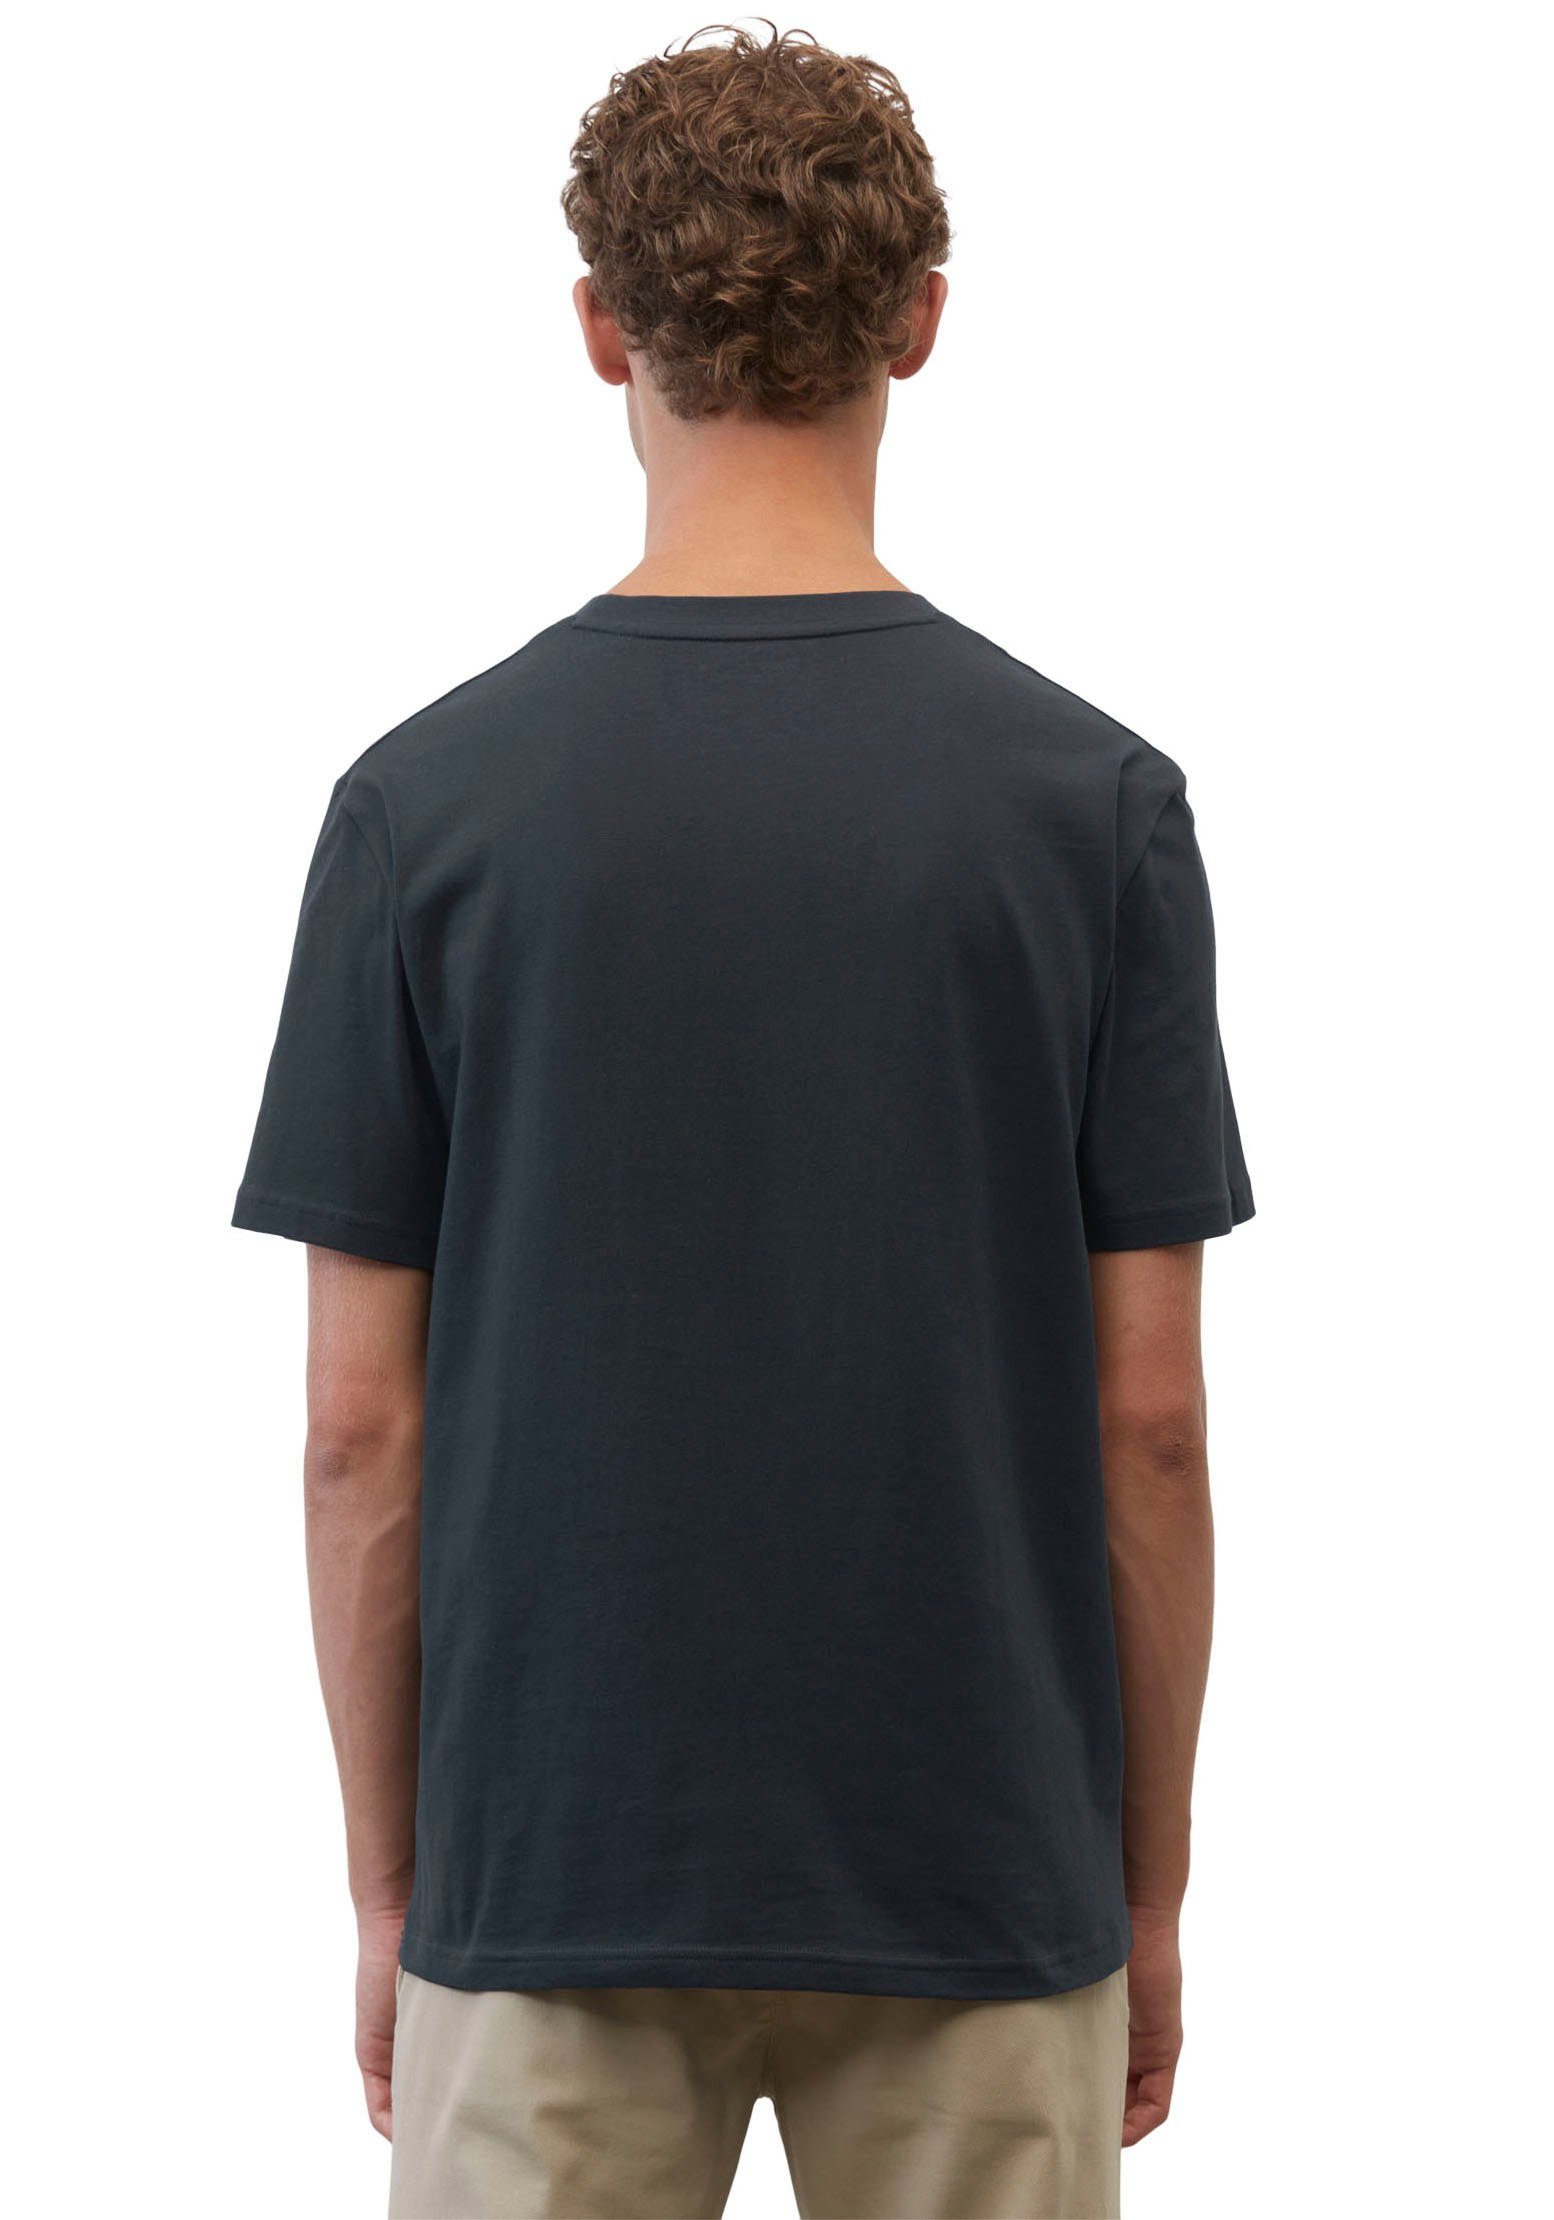 Marc O'Polo T-Shirt klassisches dark Logo-T-Shirt night